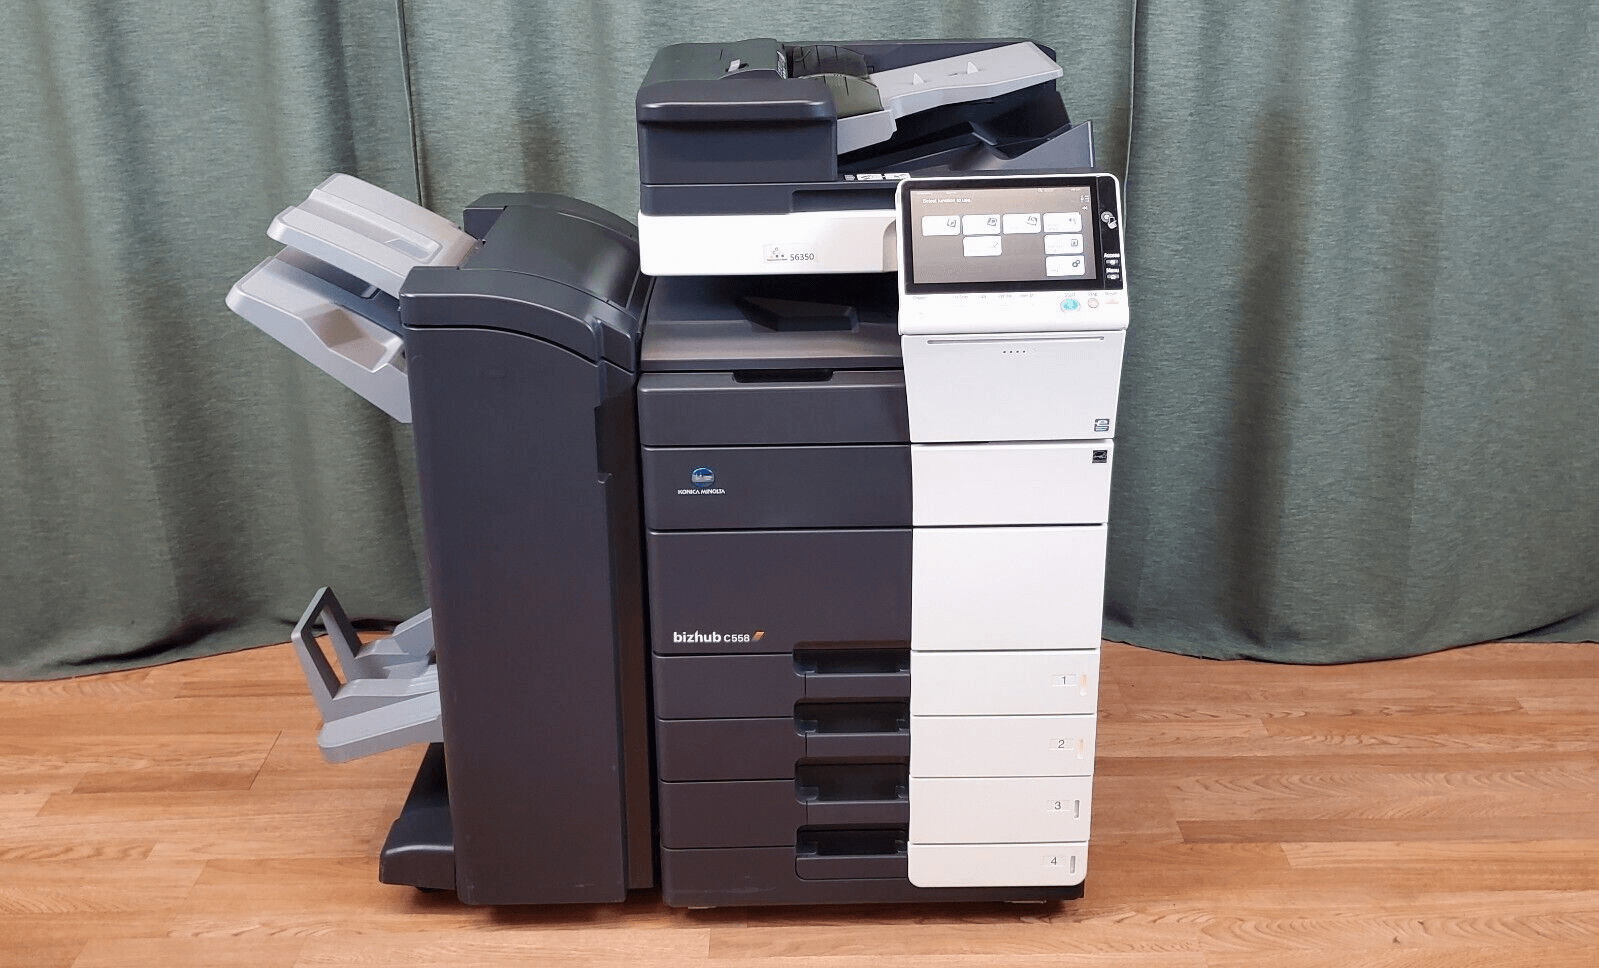 Konica Minolta Bizhub C558 Color Copier Printer Book Finisher Low Usage 124k!!!! - copier-clearance-center